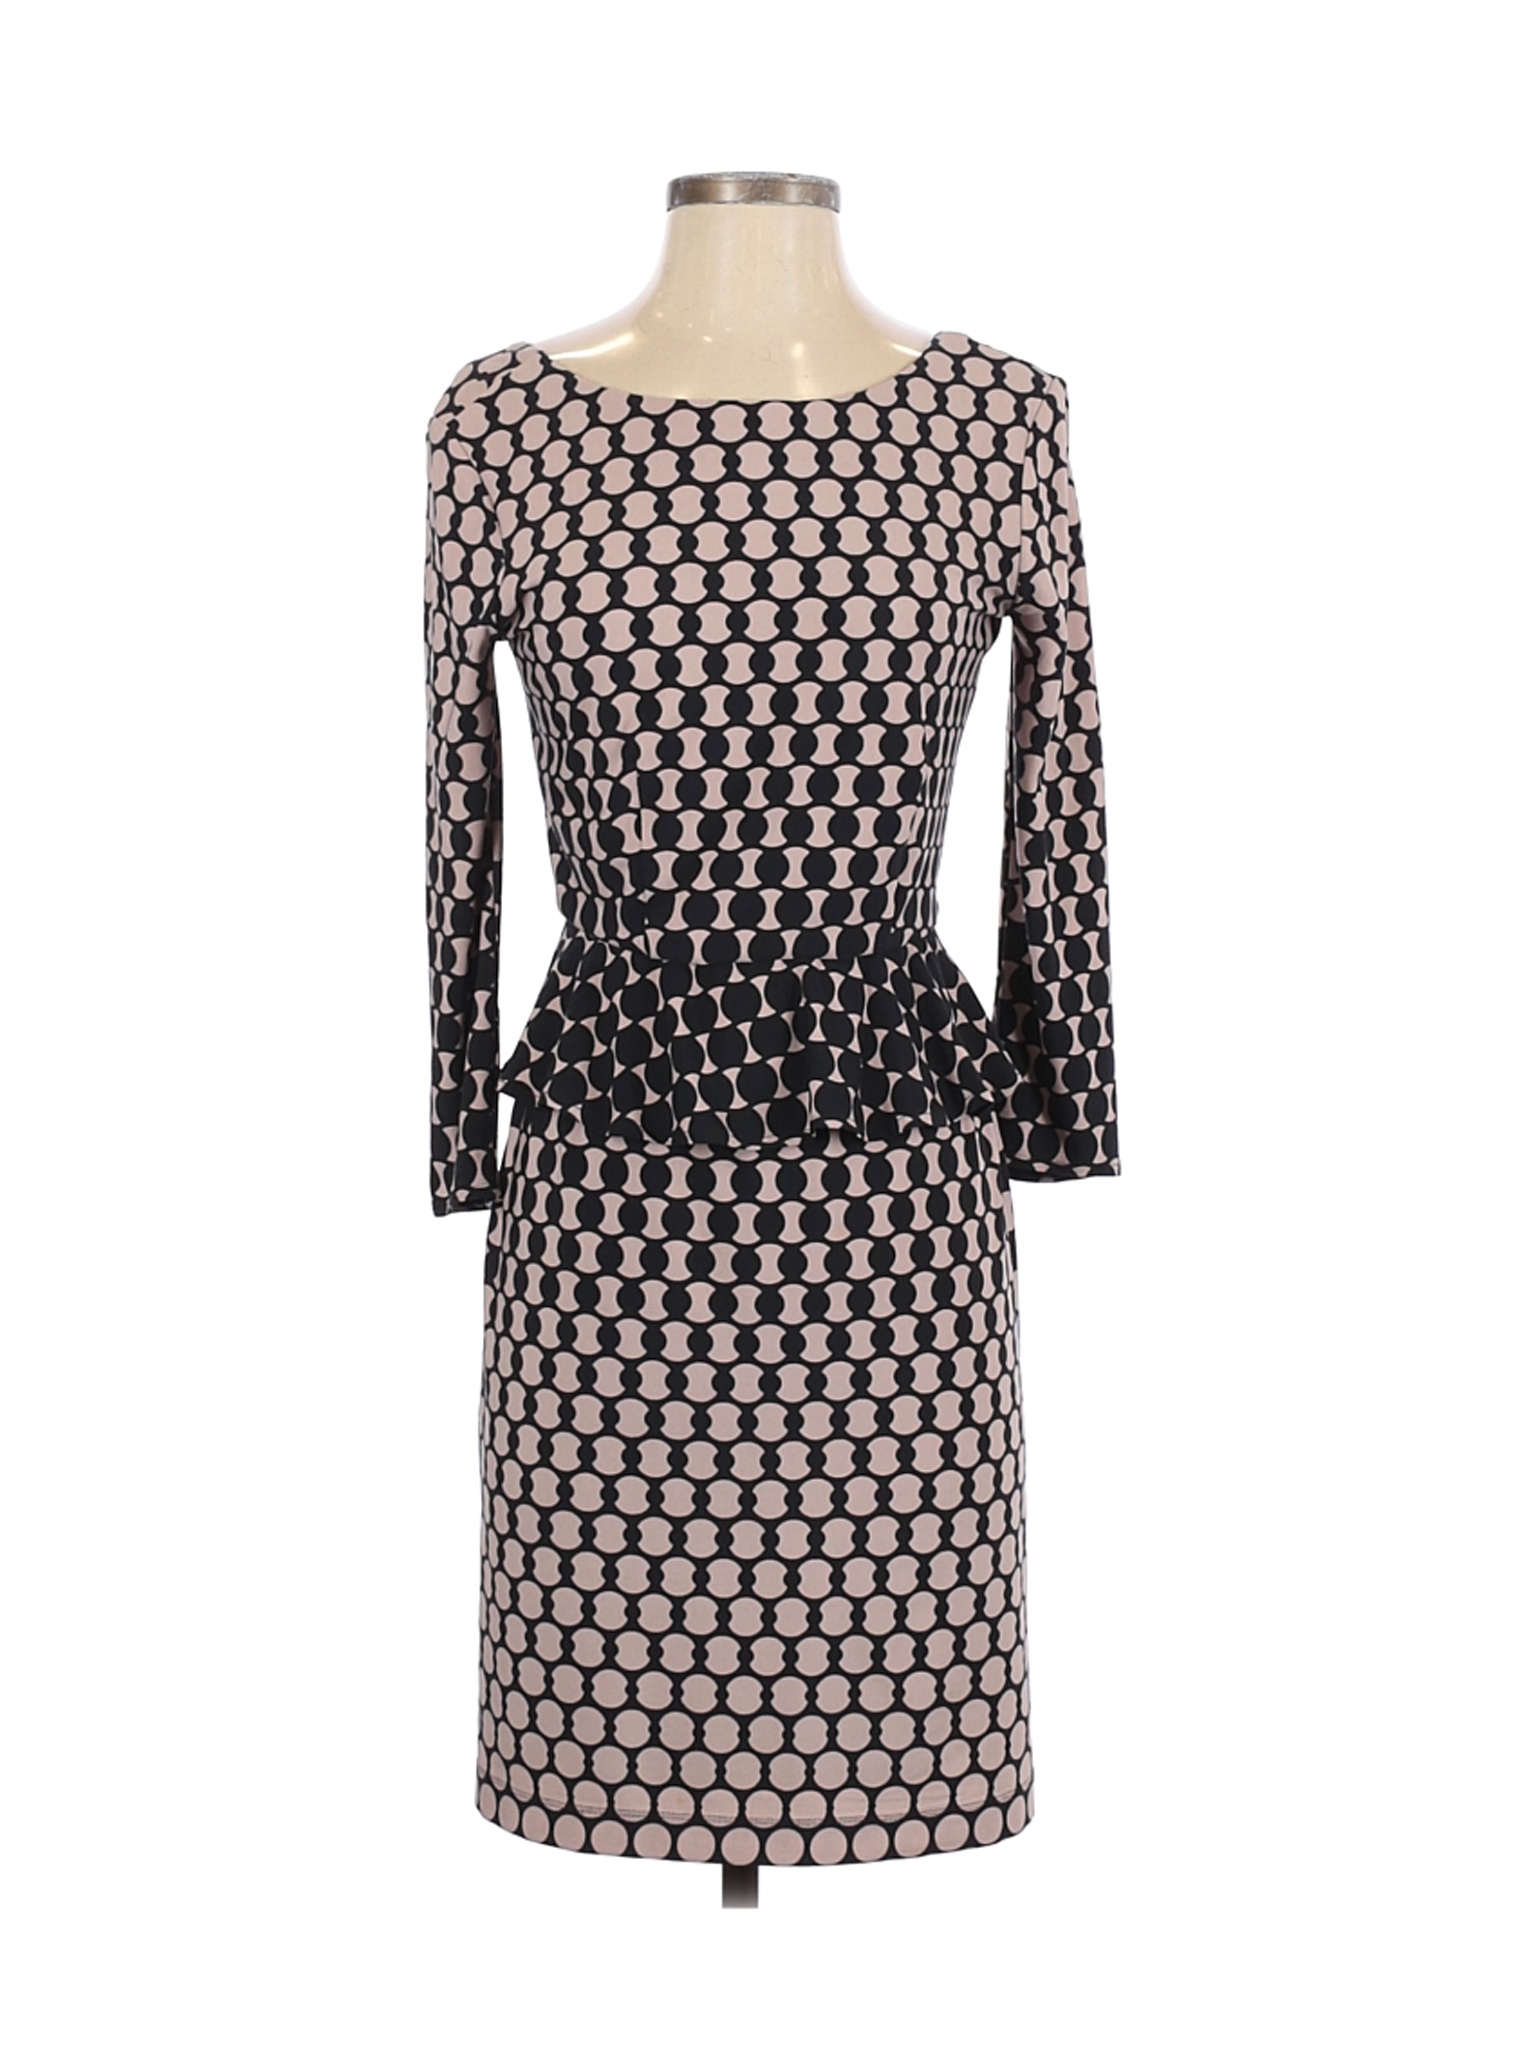 Donna Morgan Women Black Casual Dress 2 | eBay